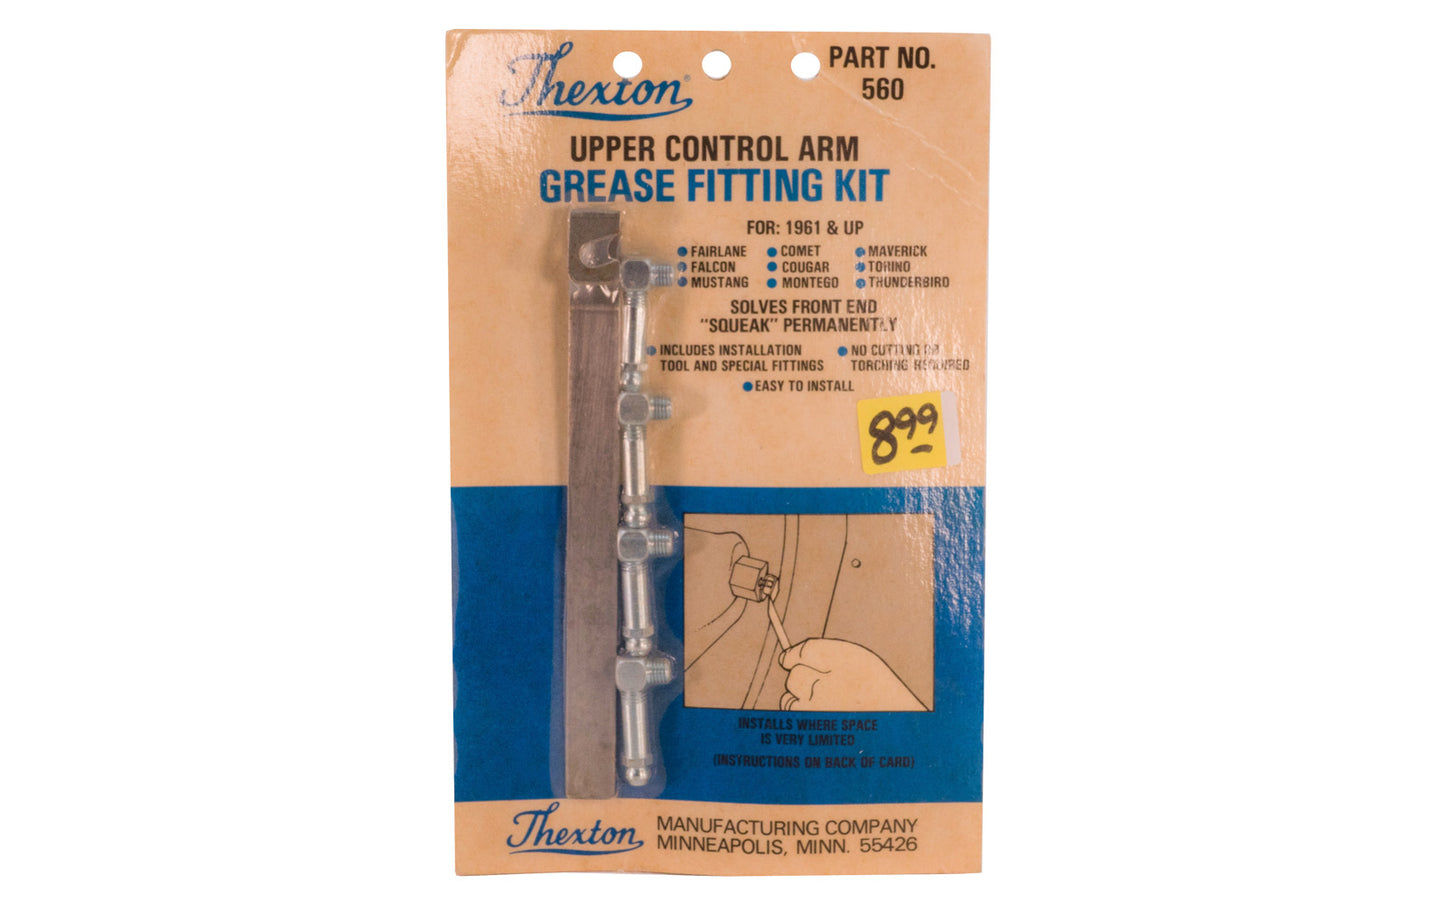 Thexton Upper Control Arm Grease Fitting Kit. Thexton Manufacturing Company, Minneapolis MINN. Part No. 560.